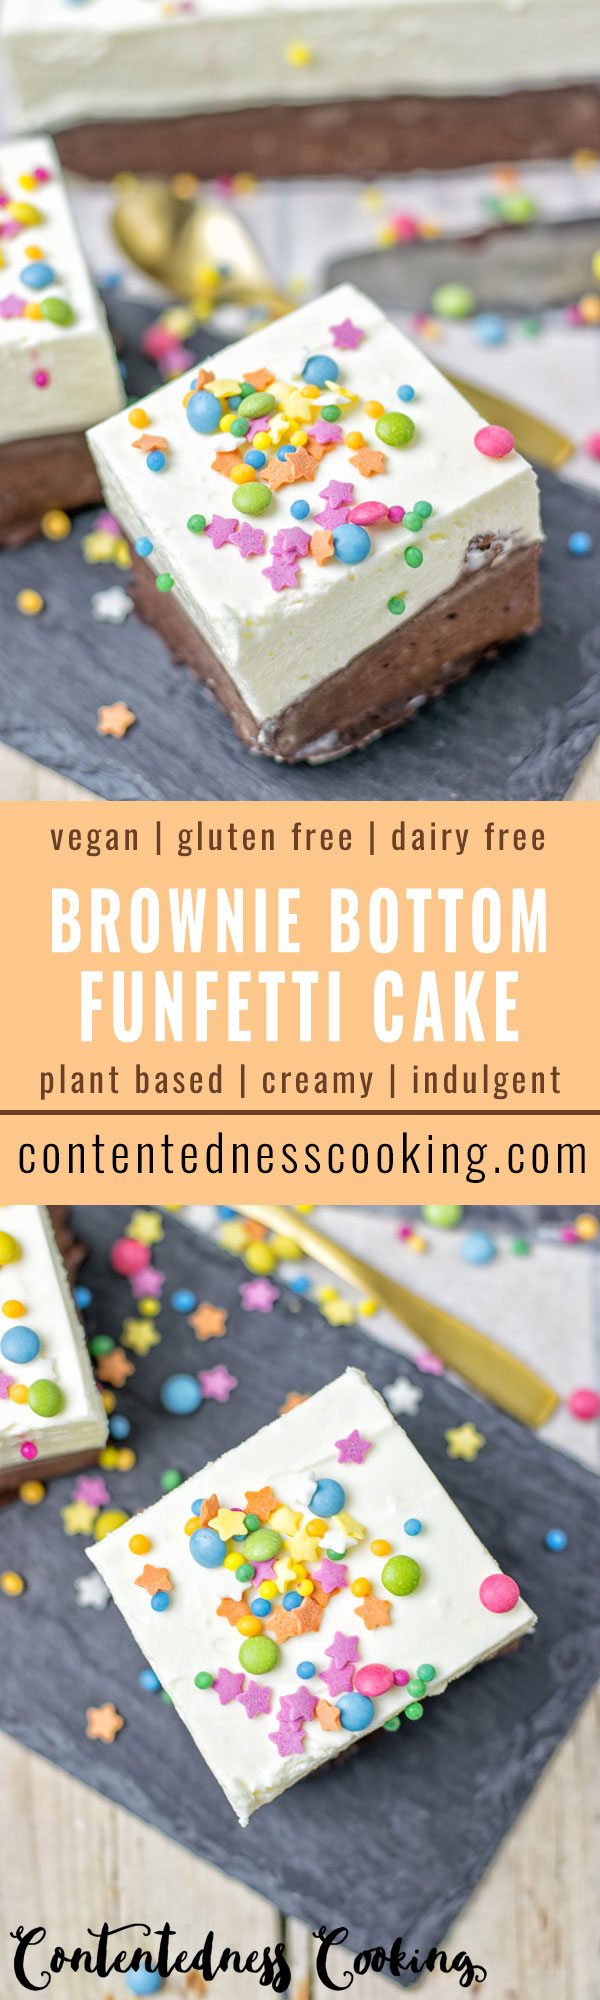 Oreo Brownie Bottom Funfetti Cake | #vegan #glutenfree #contentednesscooking